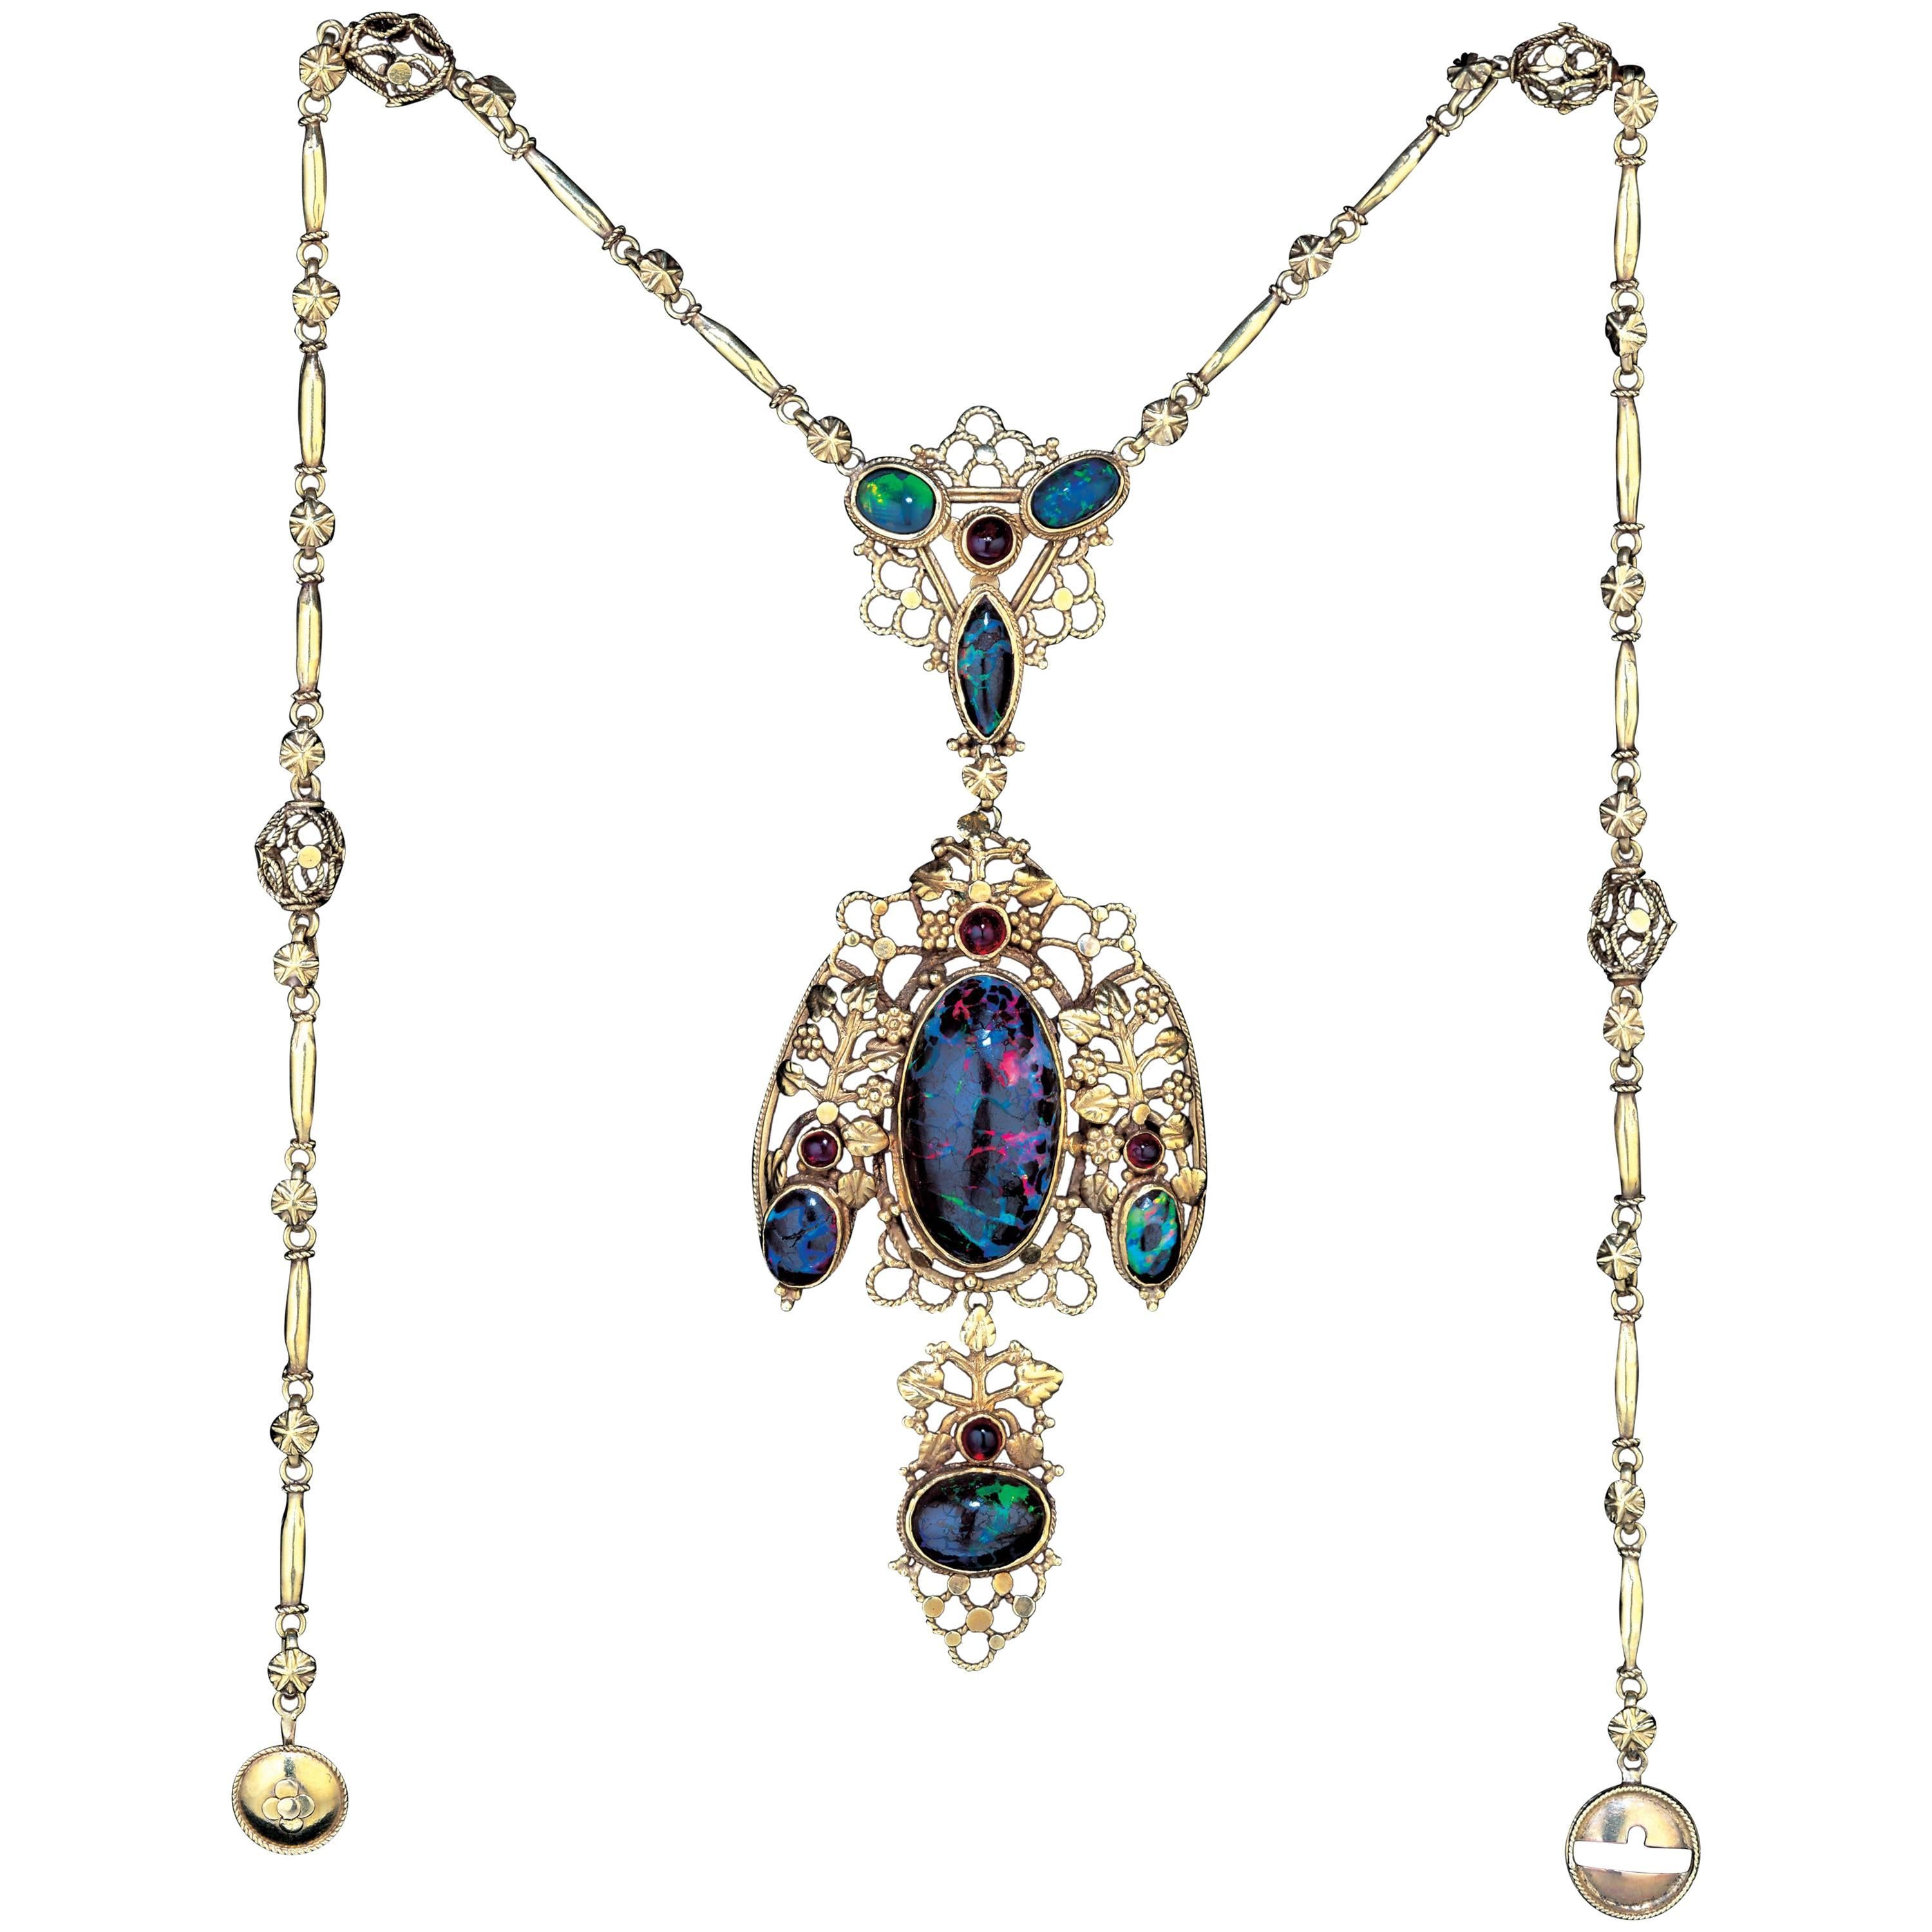 John Bonnor a Superb Arts & Crafts Gold, Black Opal and Ruby Necklace